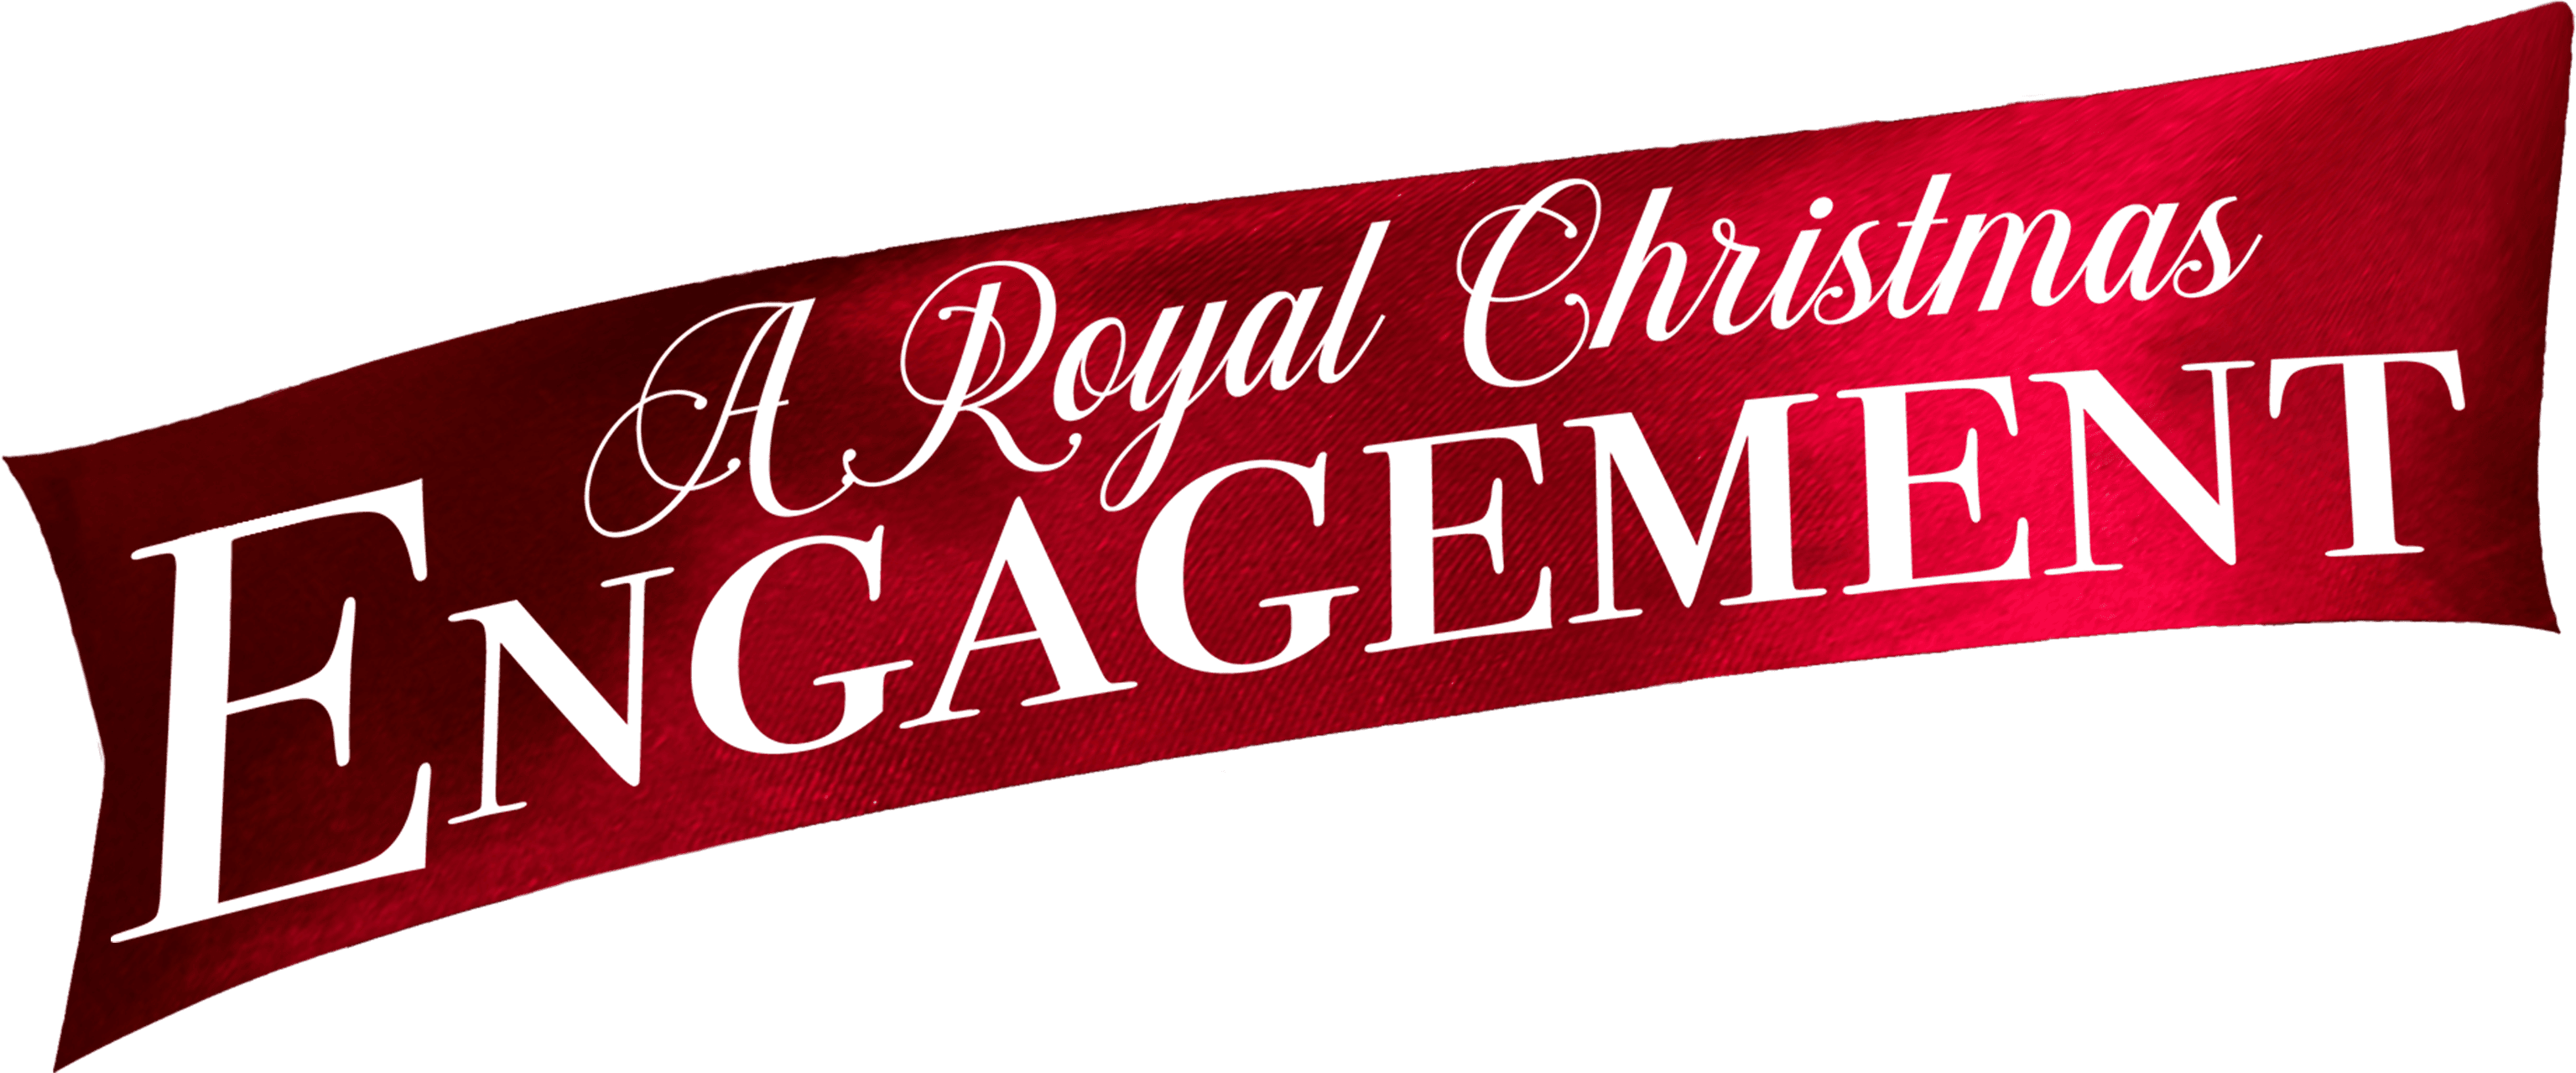 A Royal Christmas Engagement logo